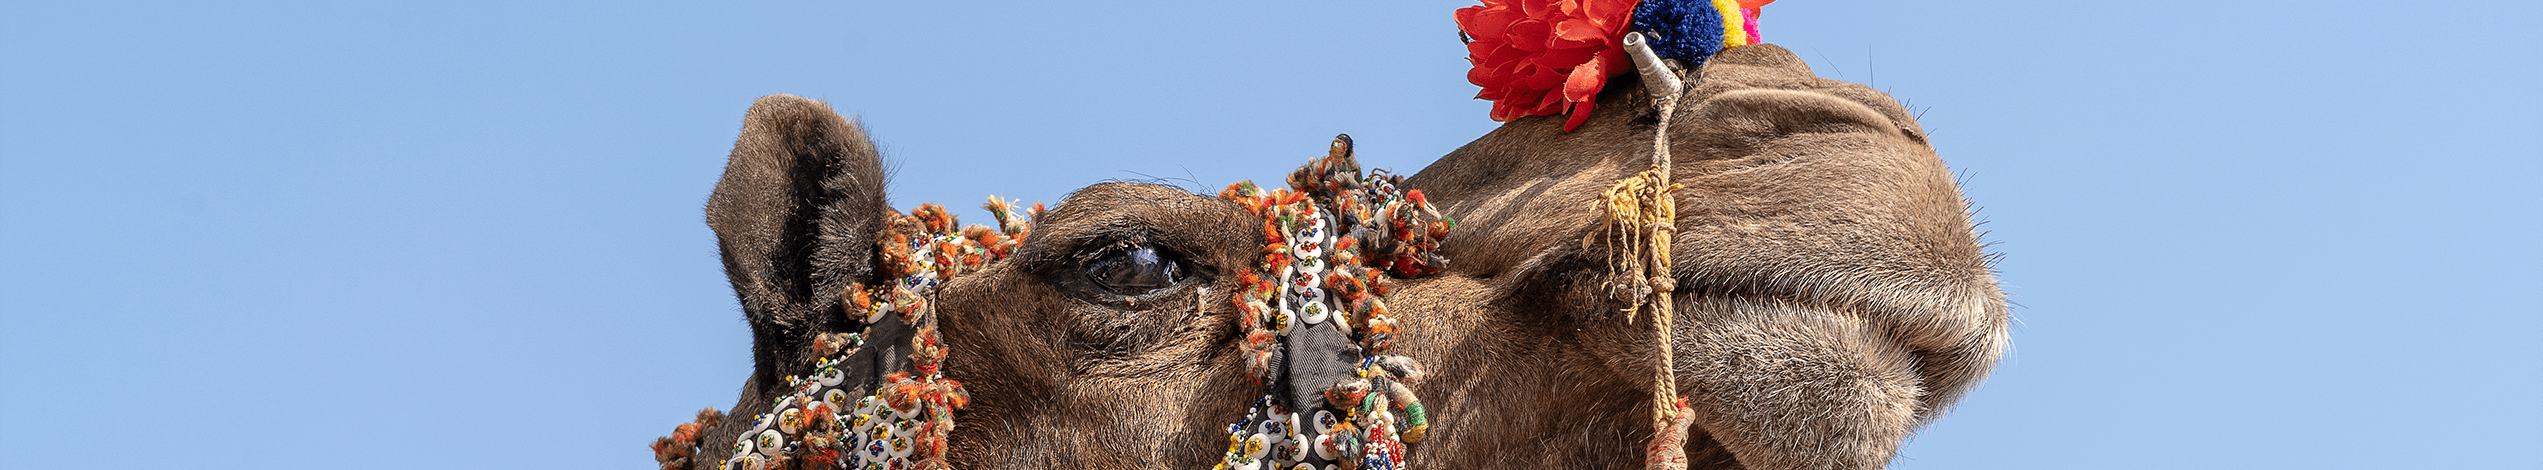 Bikaner kamelfestival